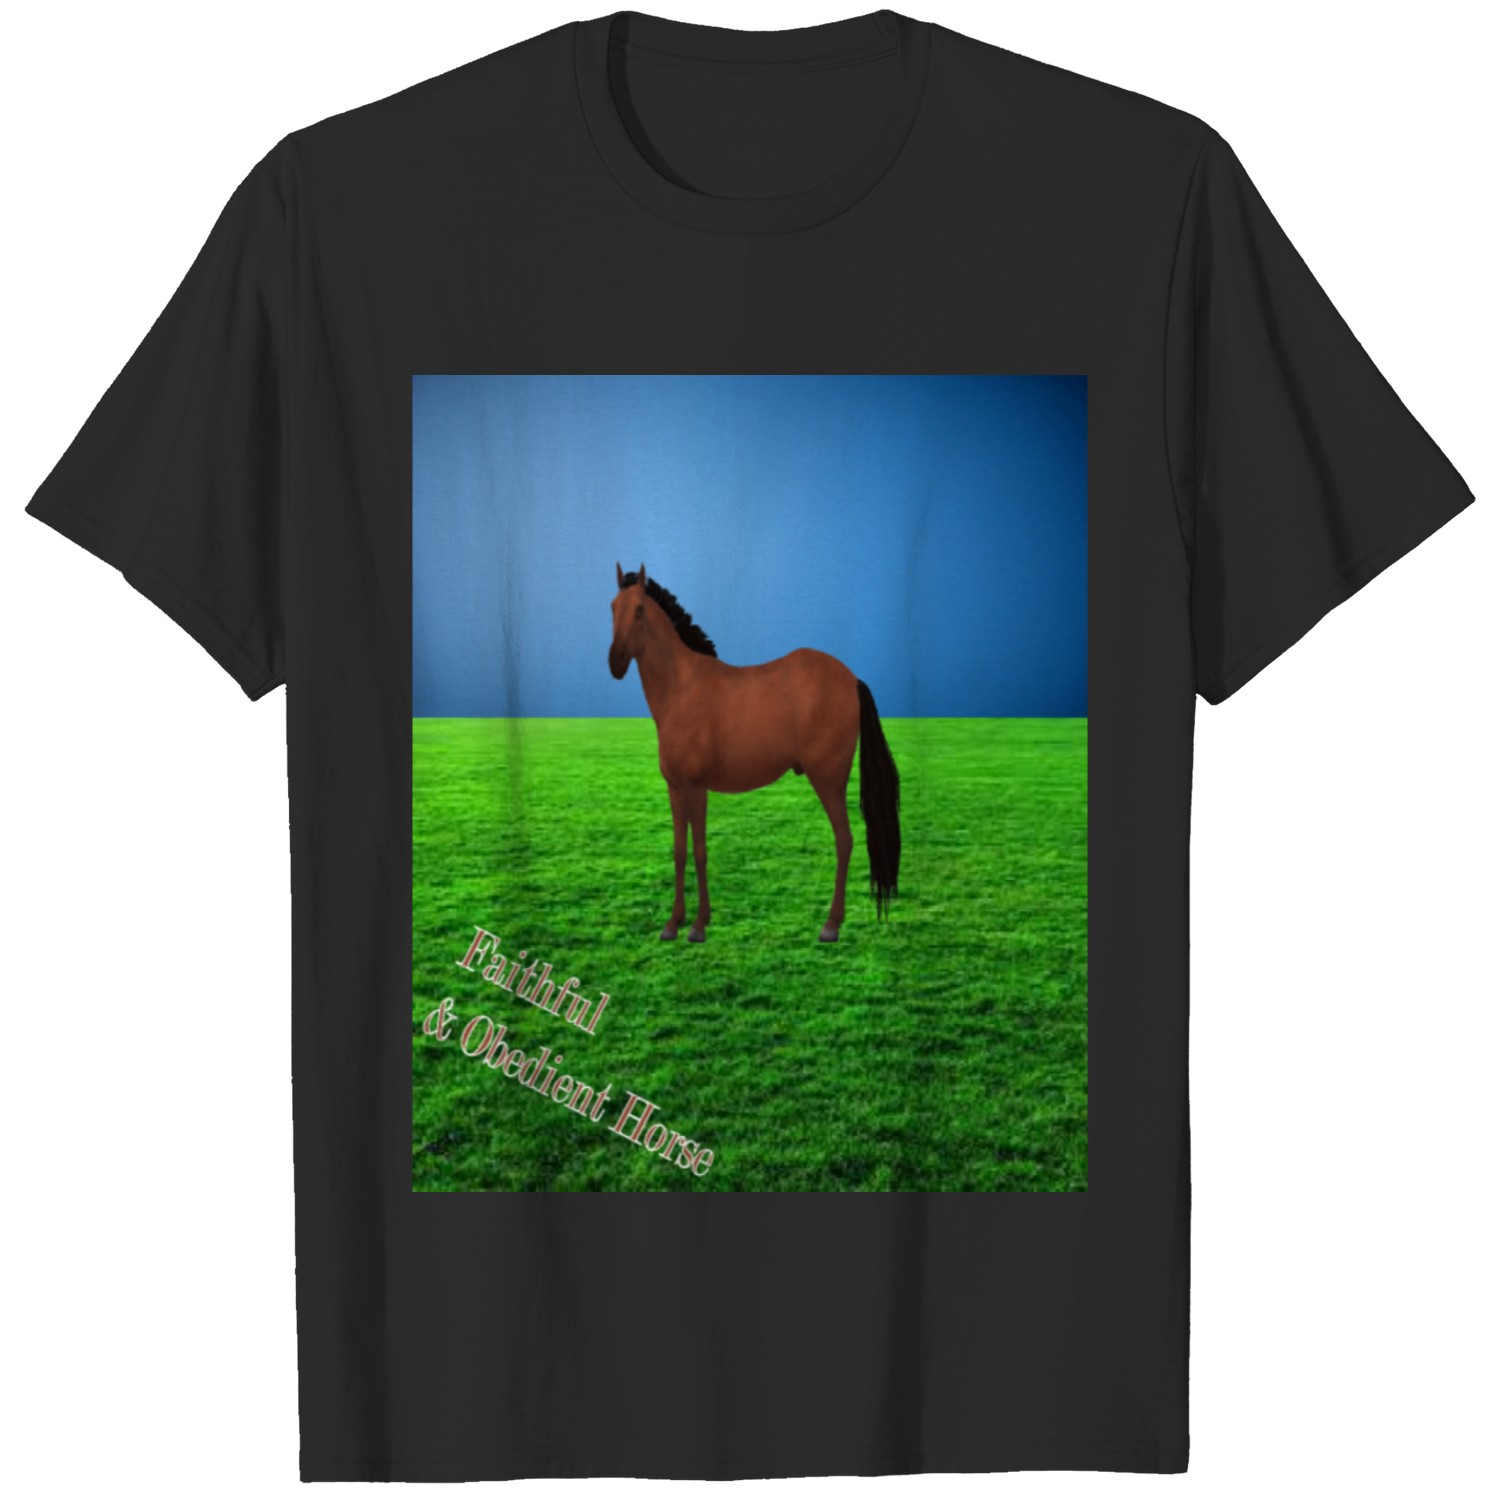 obedient Horse T-shirt